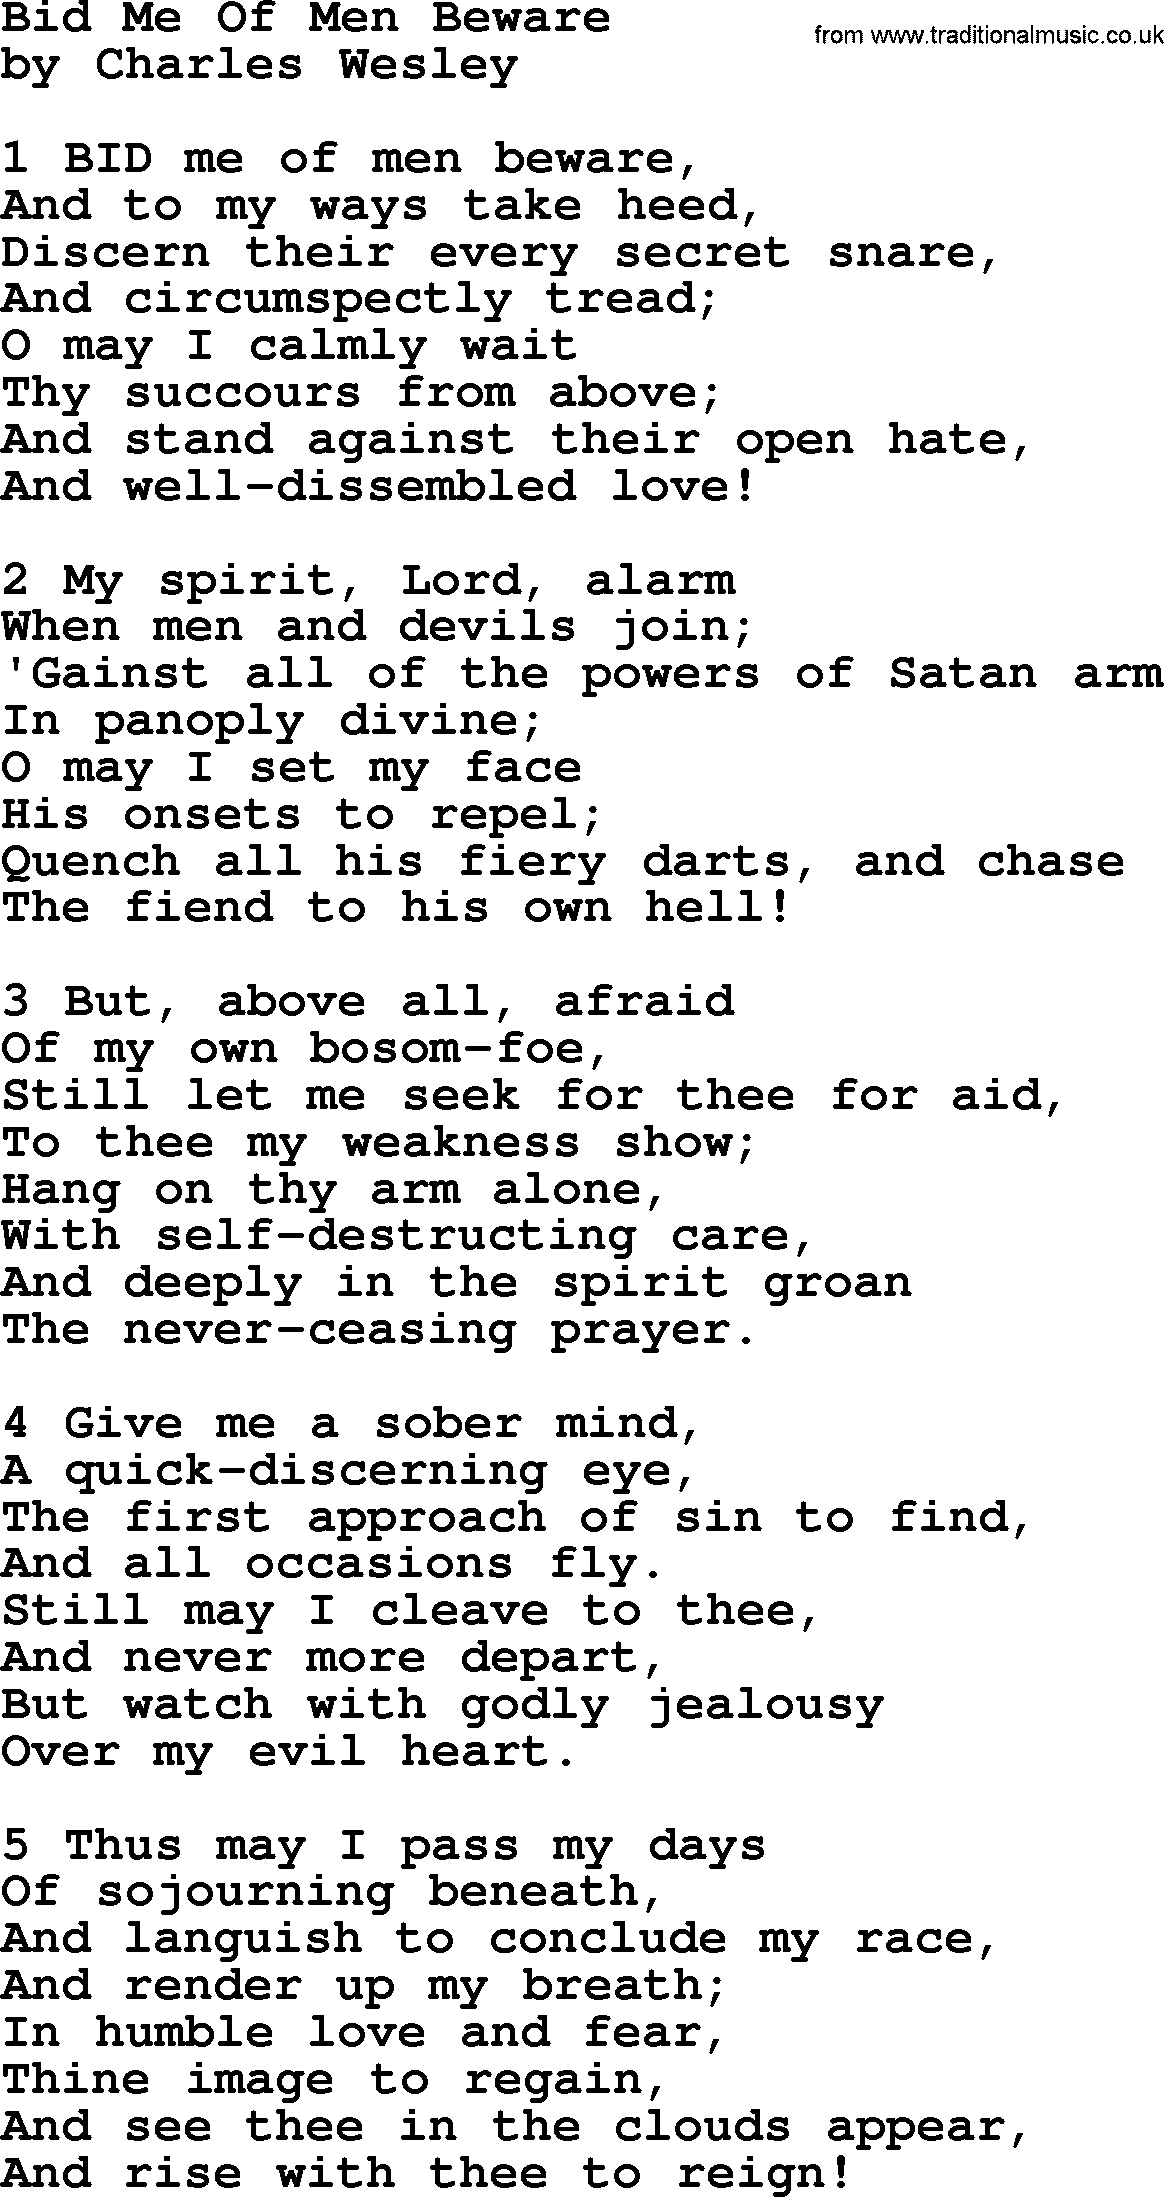 Charles Wesley hymn: Bid Me Of Men Beware, lyrics